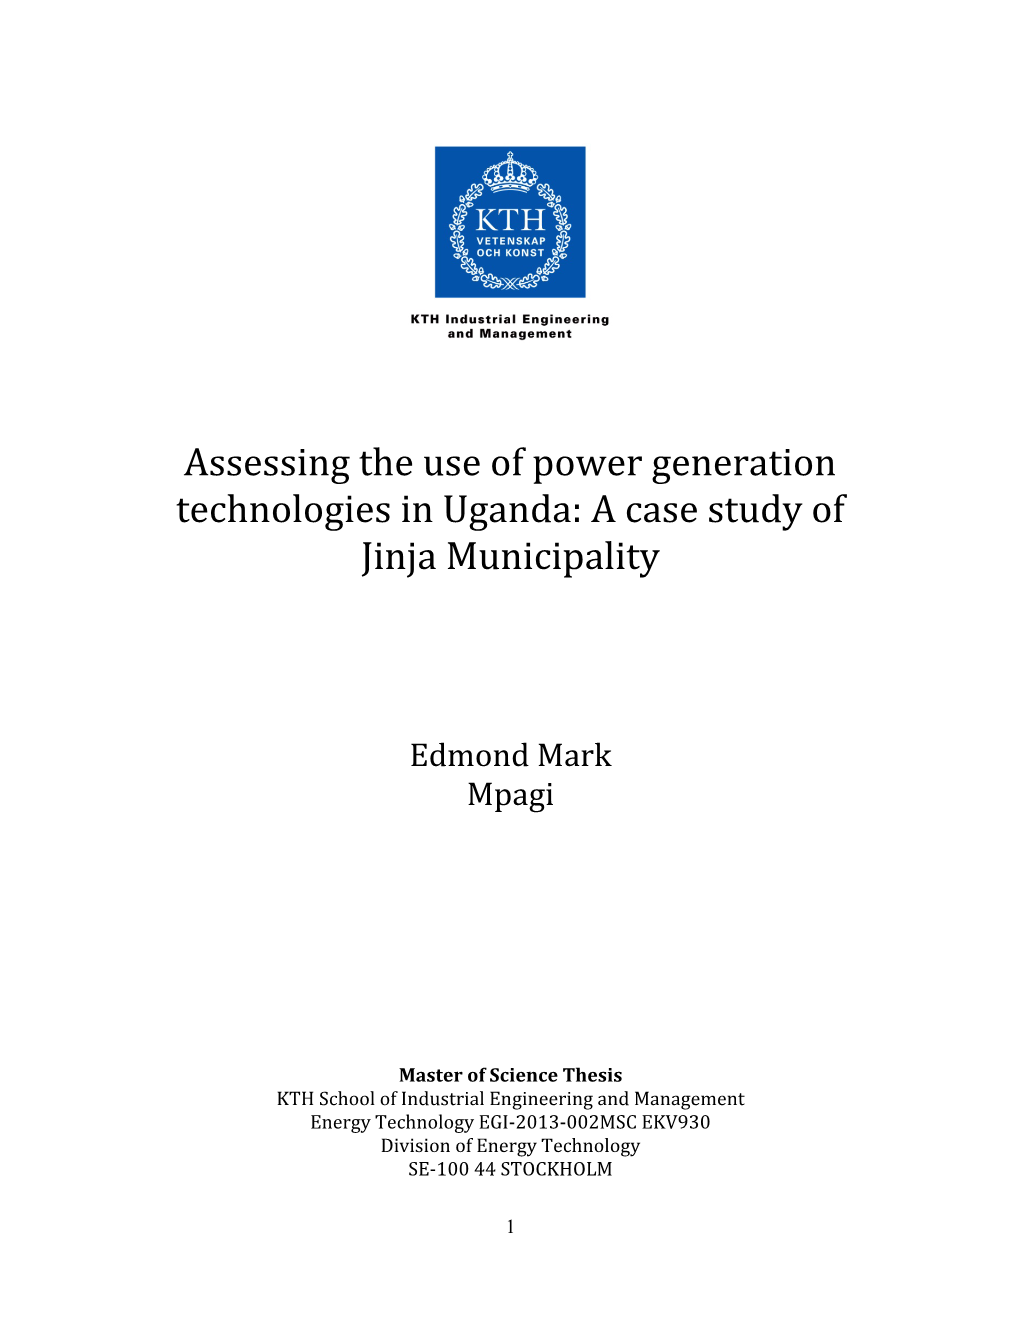 Assessing the Use of Power Generation Technologies in Uganda: a Case Study of Jinja Municipality